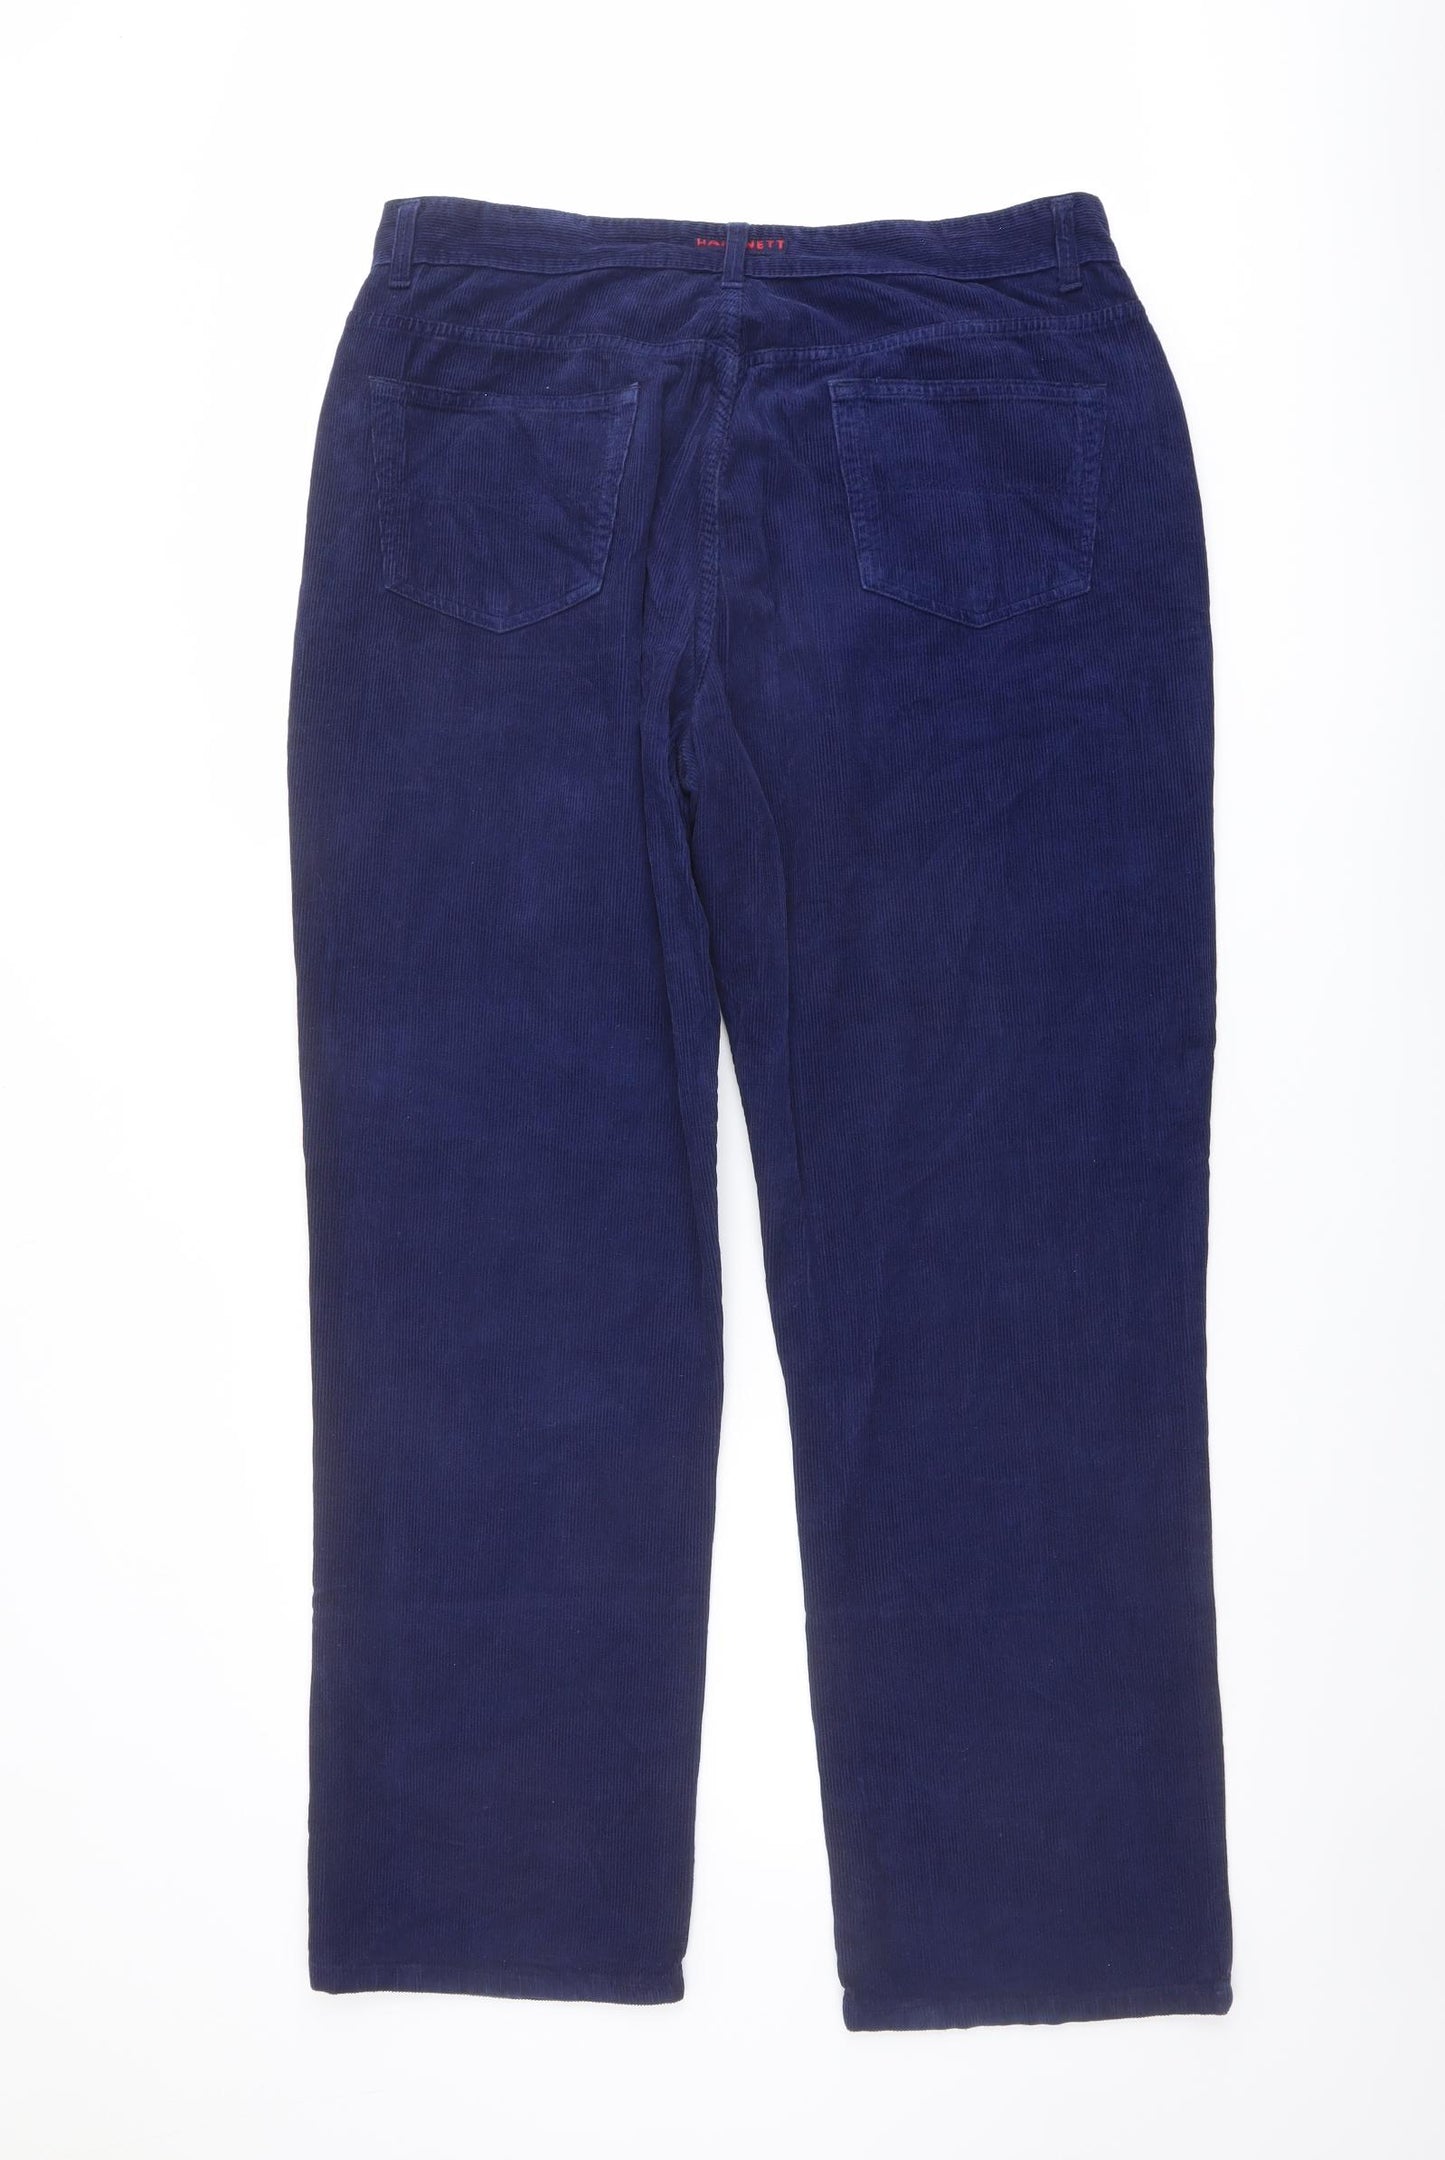 Hamnett Womens Blue Cotton Trousers Size 14 L30 in Regular Button